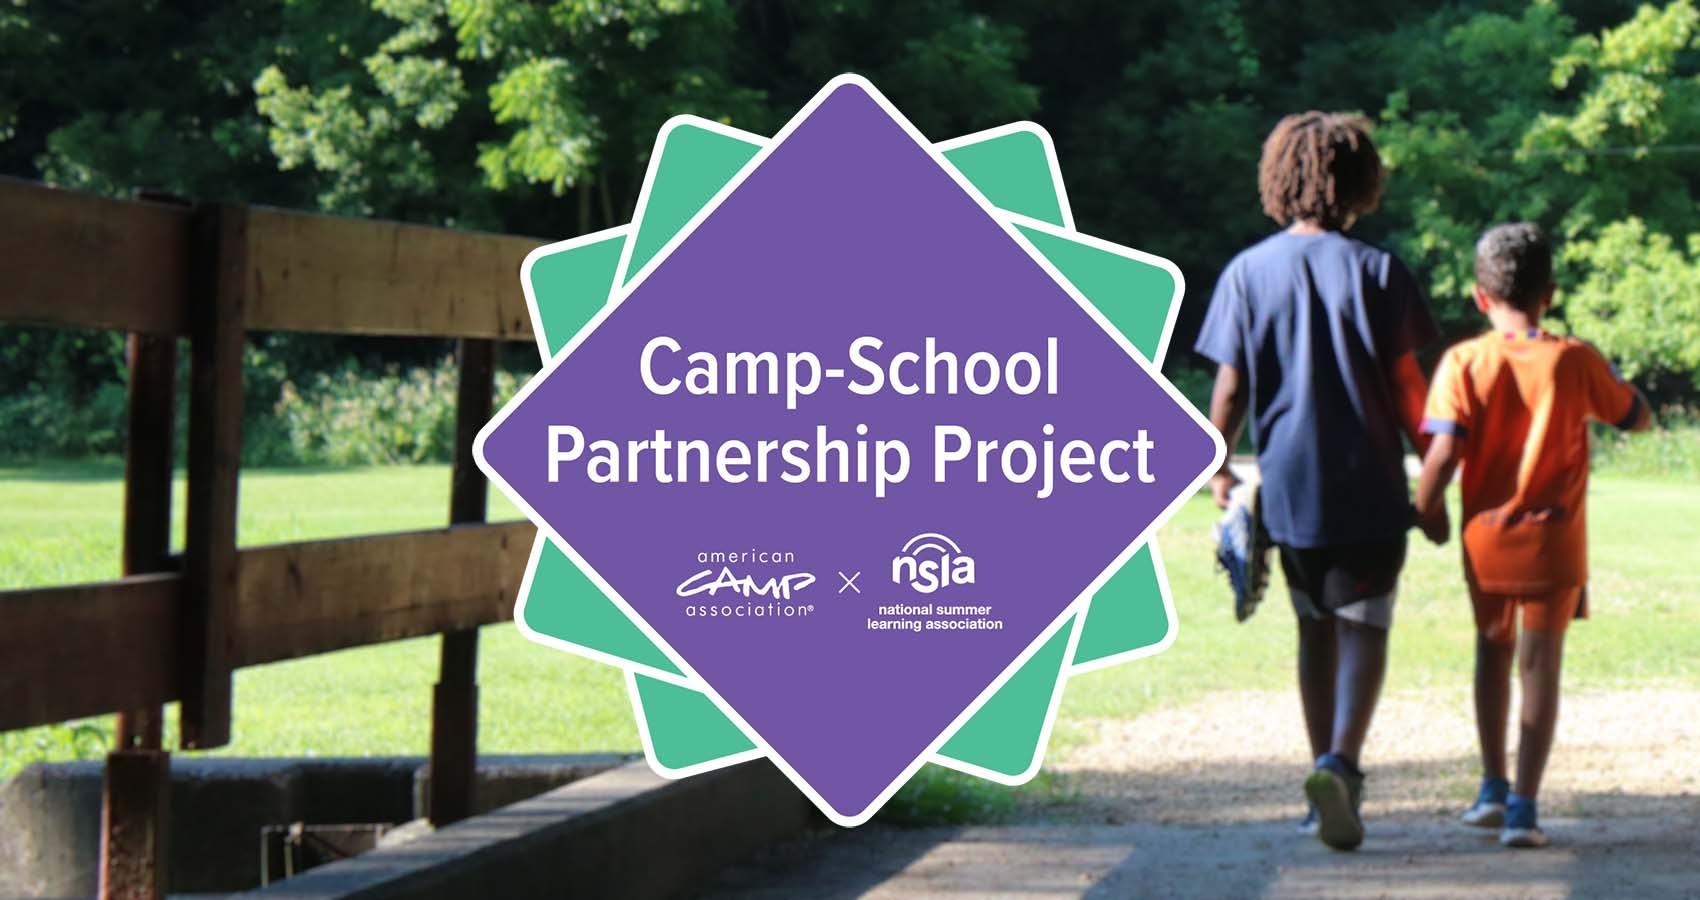 Camp-School Partnership Project logo